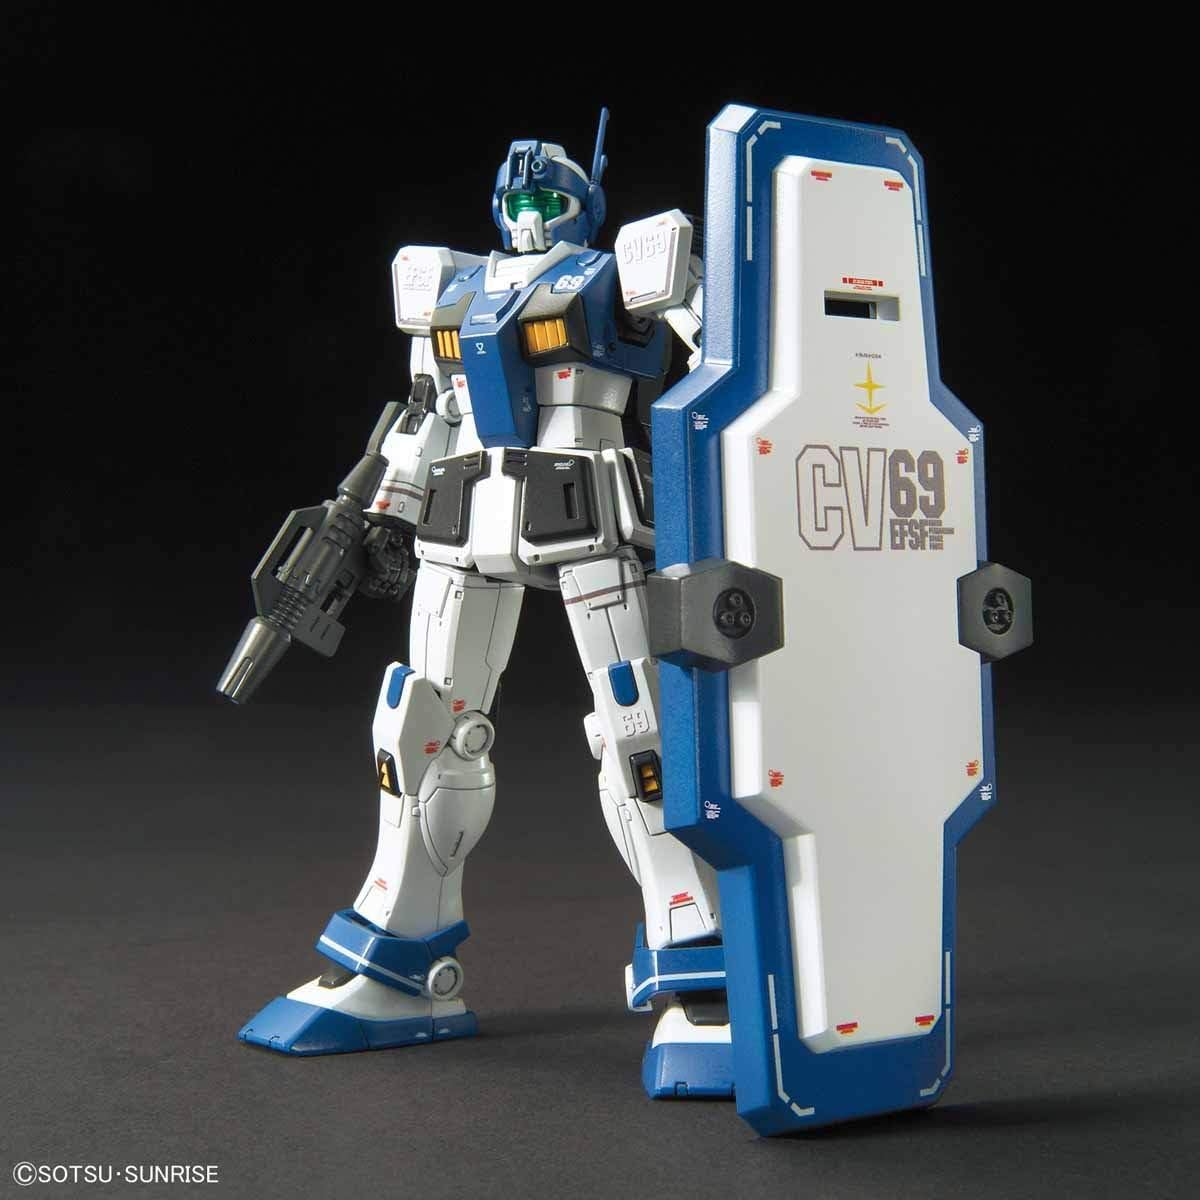 1/144 HG "Gundam" GM Guard Custom | animota